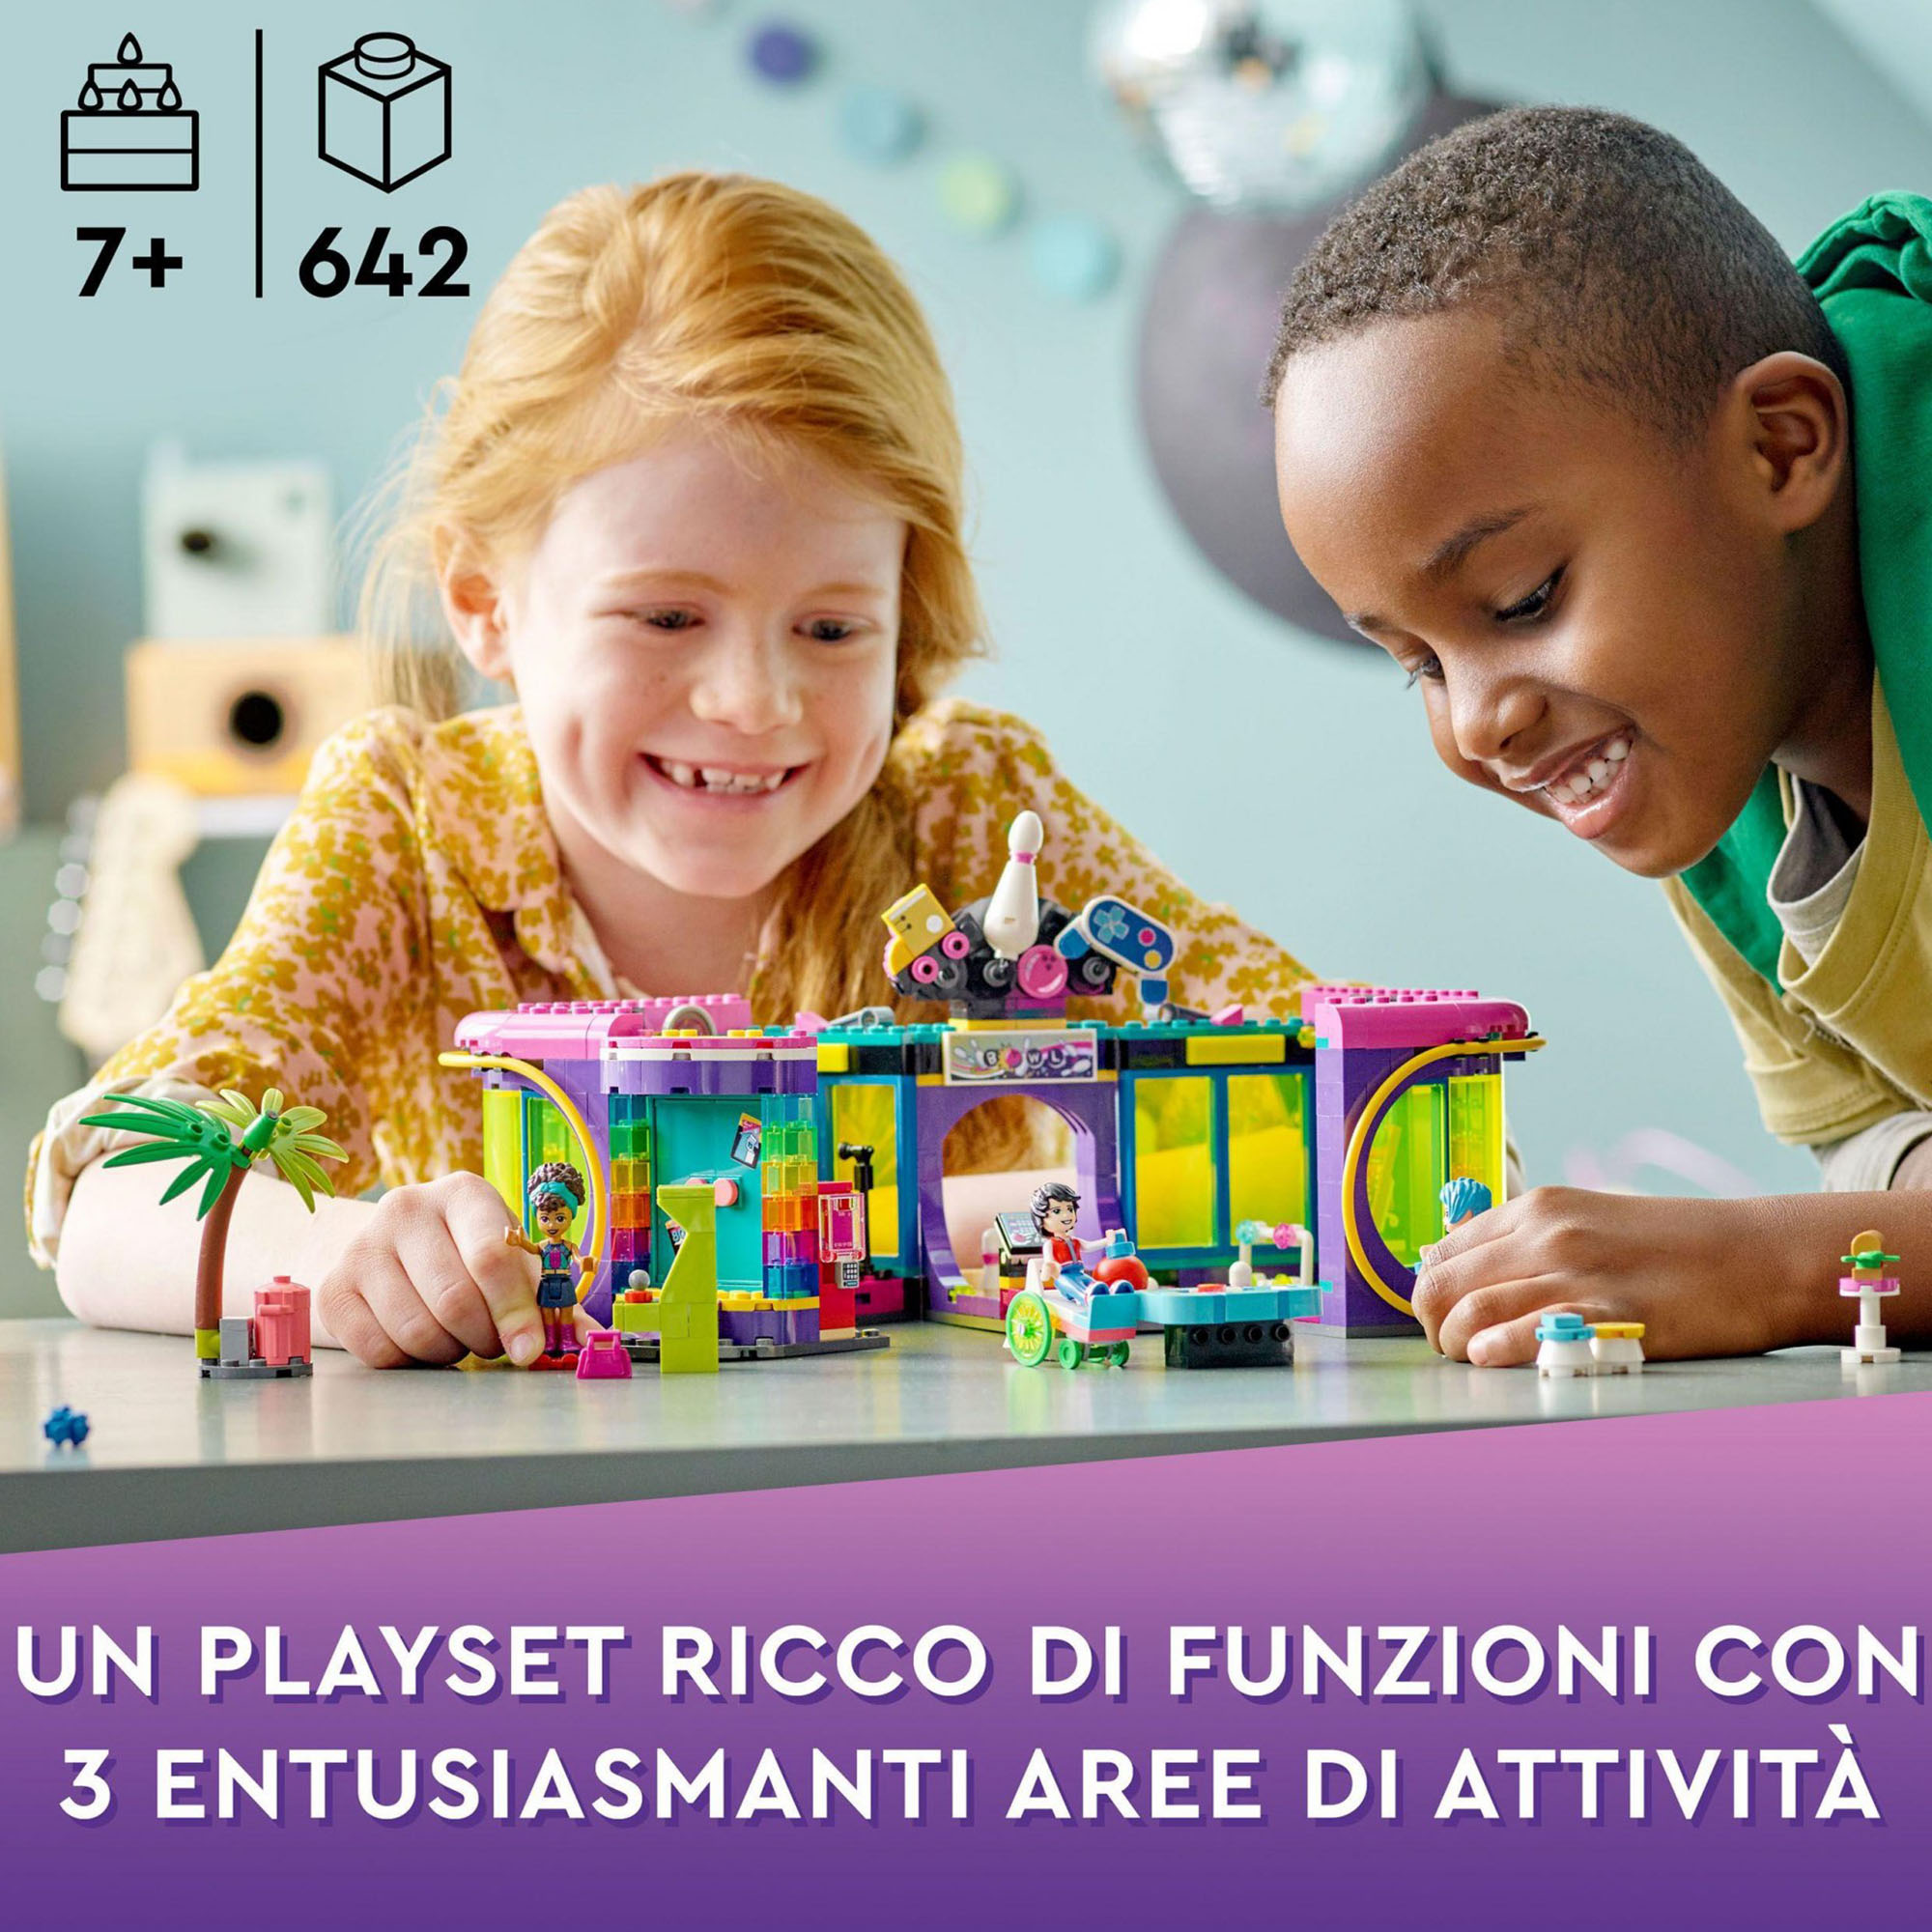 LEGO Friends Arcade Roller Disco, Set Costruzioni Discoteca, Mini Bambolina Andr 41708, , large